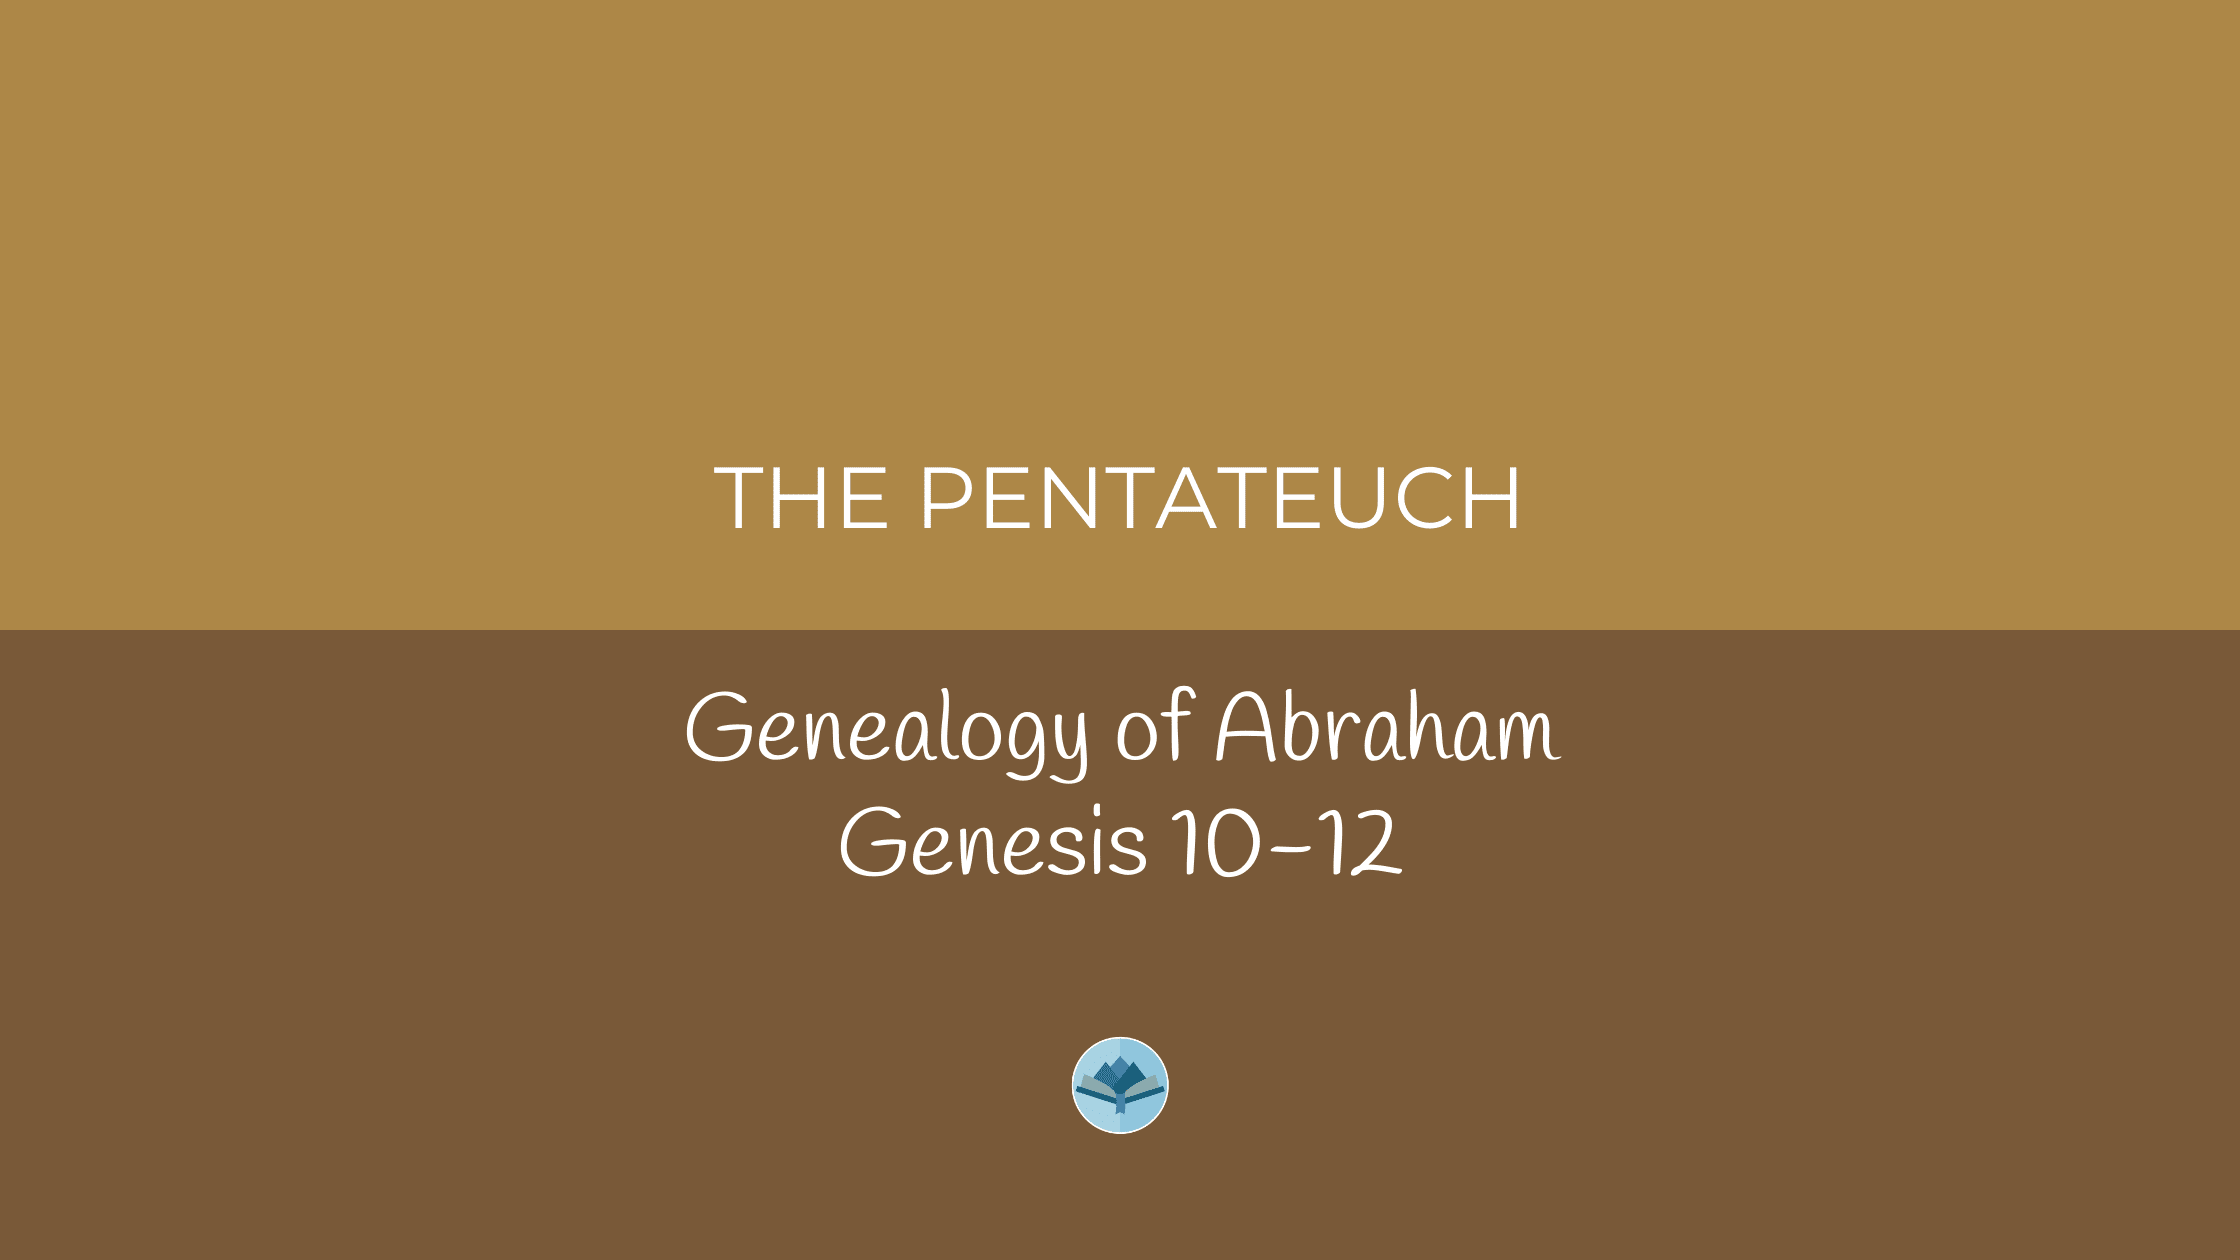 Genesis 10-12 Genealogy of Abraham